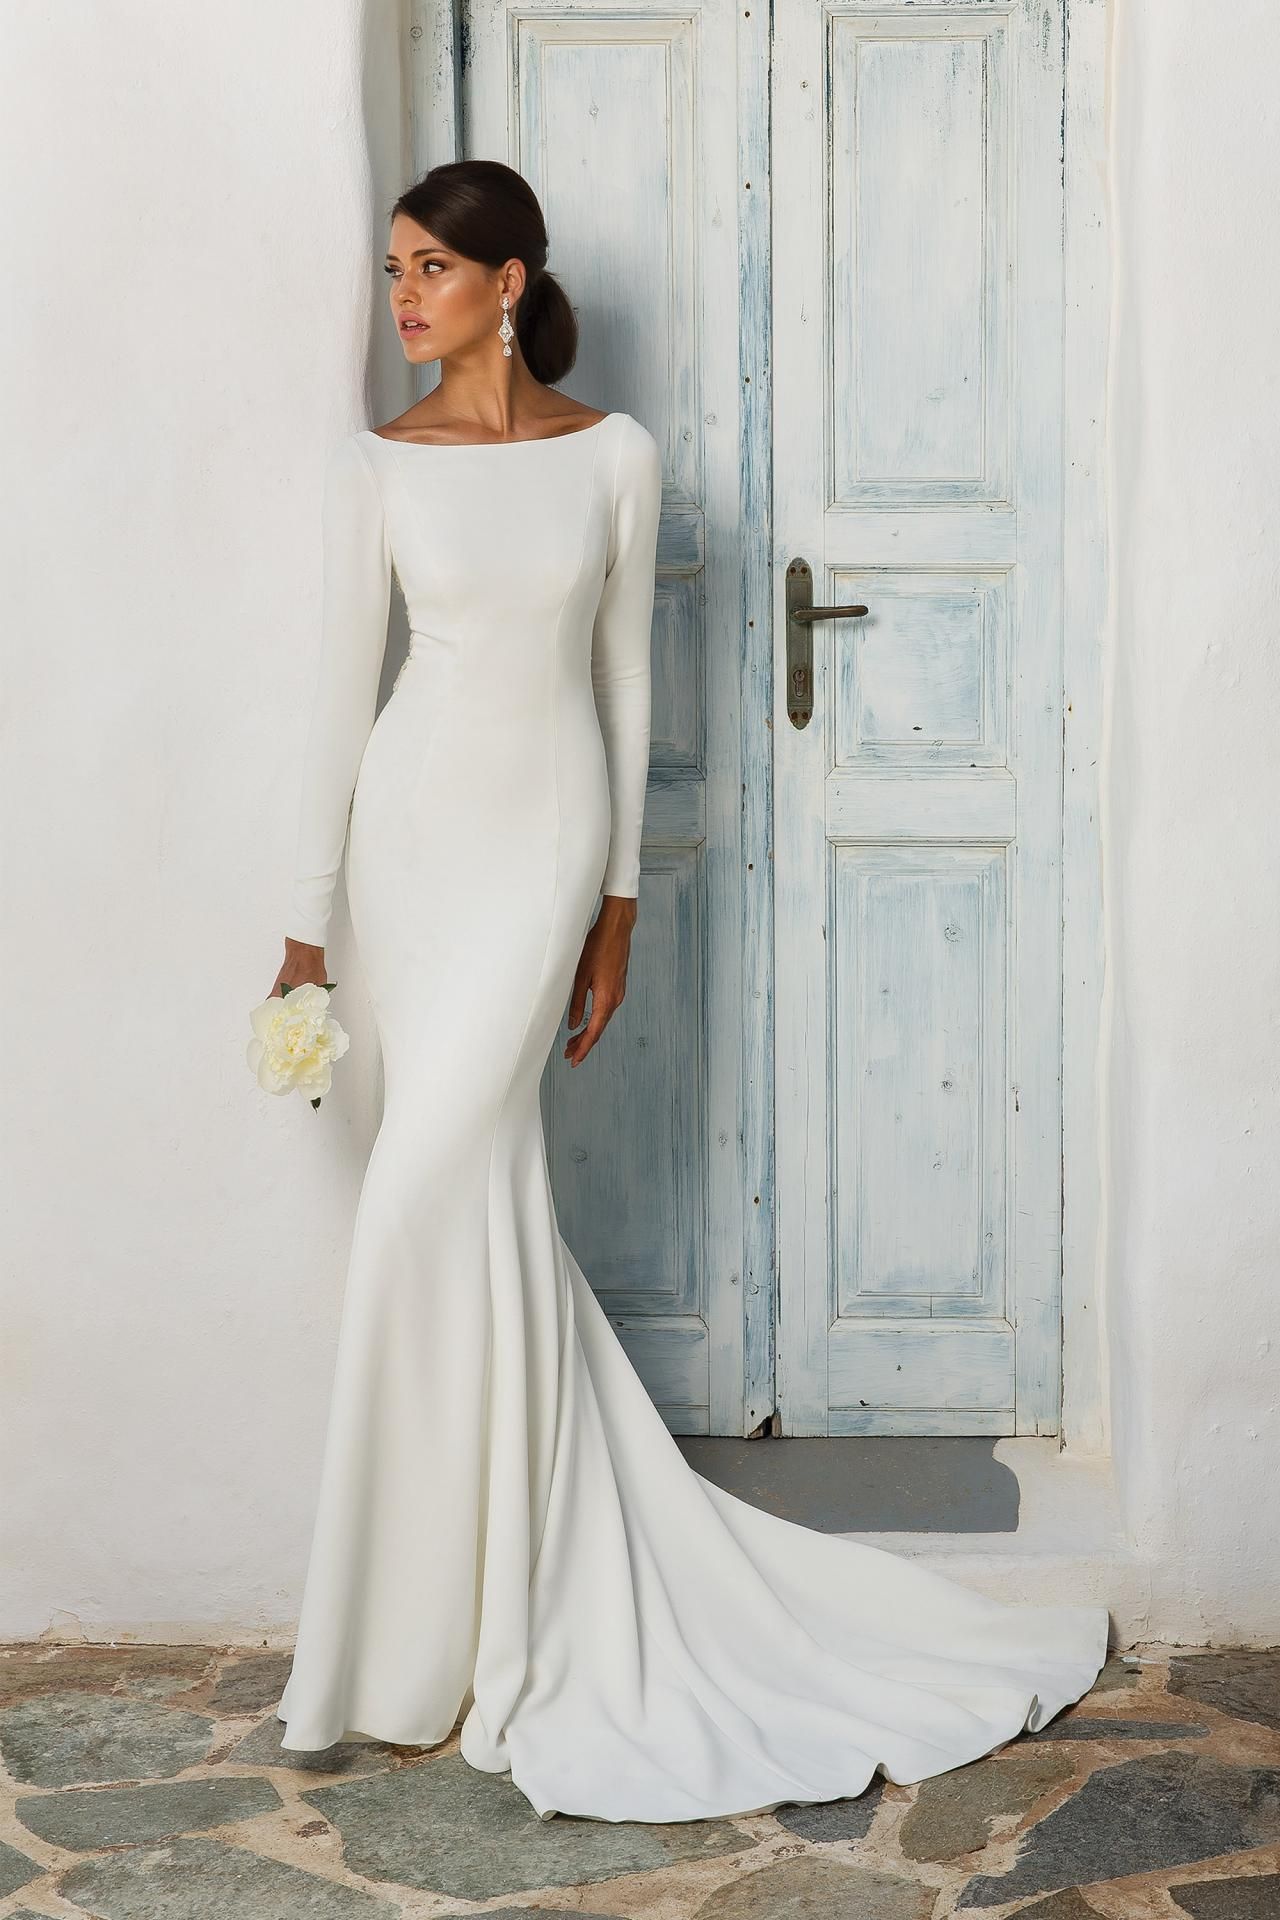 Bateau white satin mermaid wedding dress with long sleeves